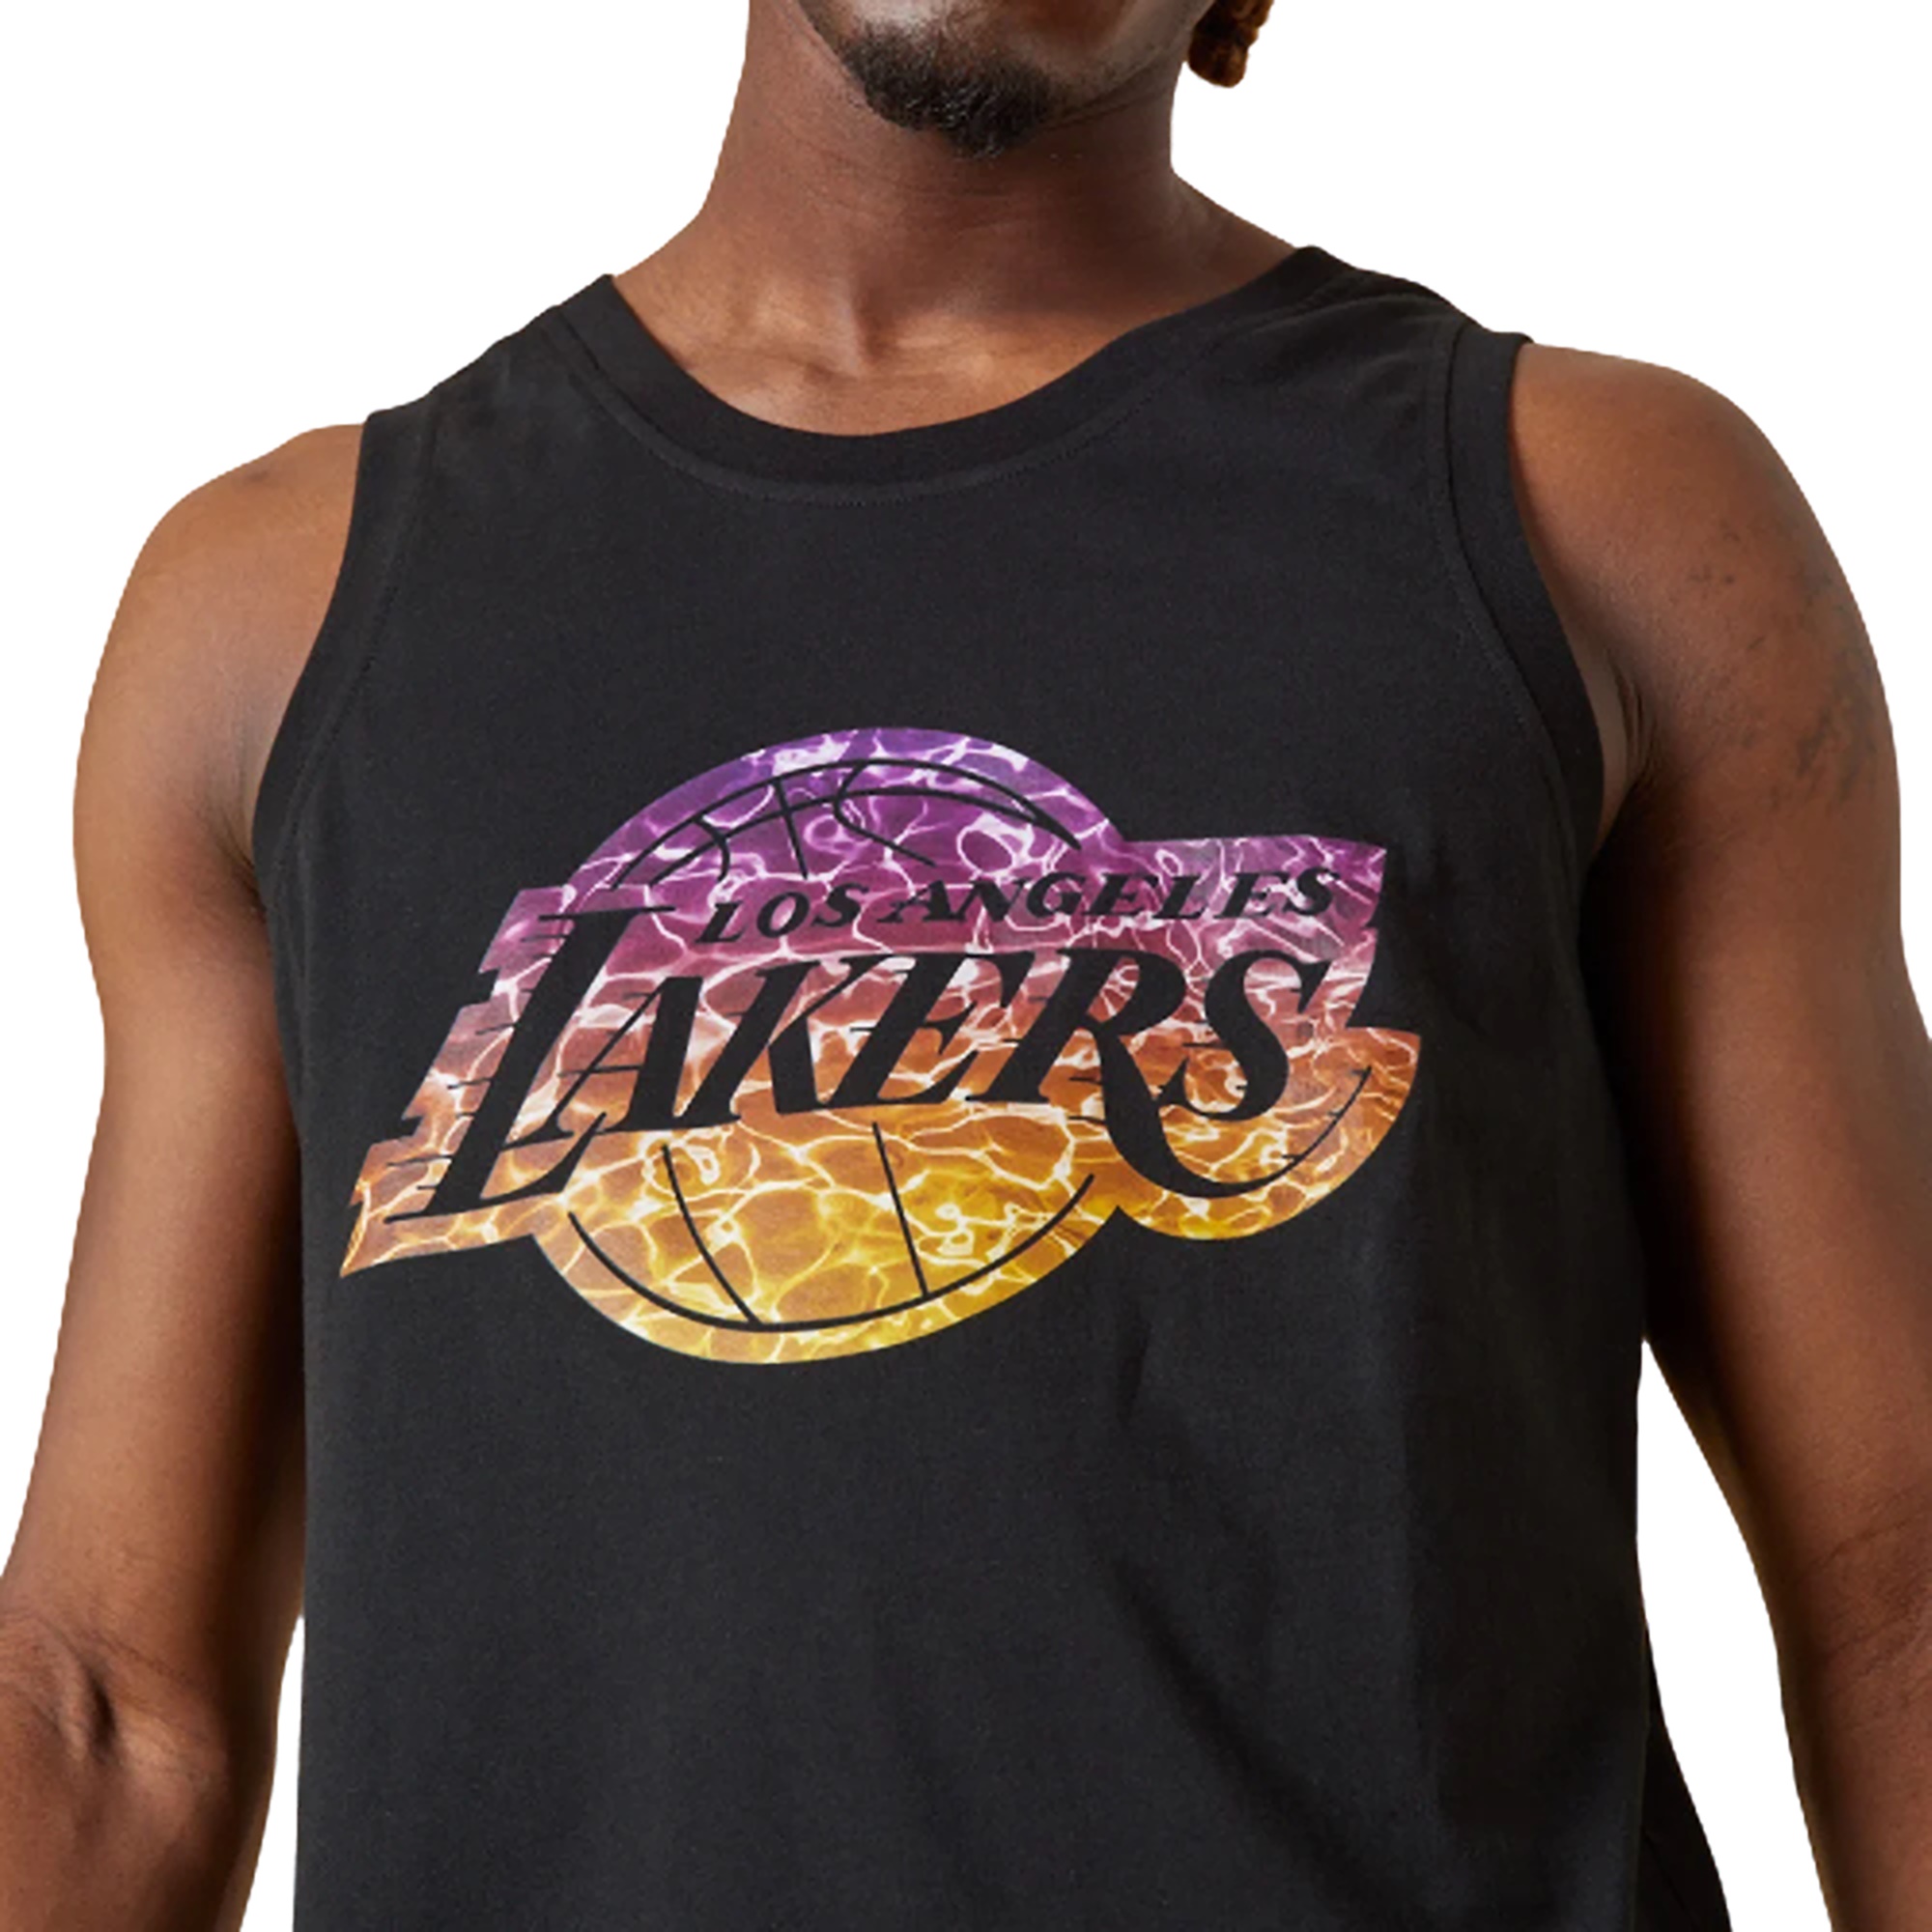 NBA Los Angeles Lakers Tank Top